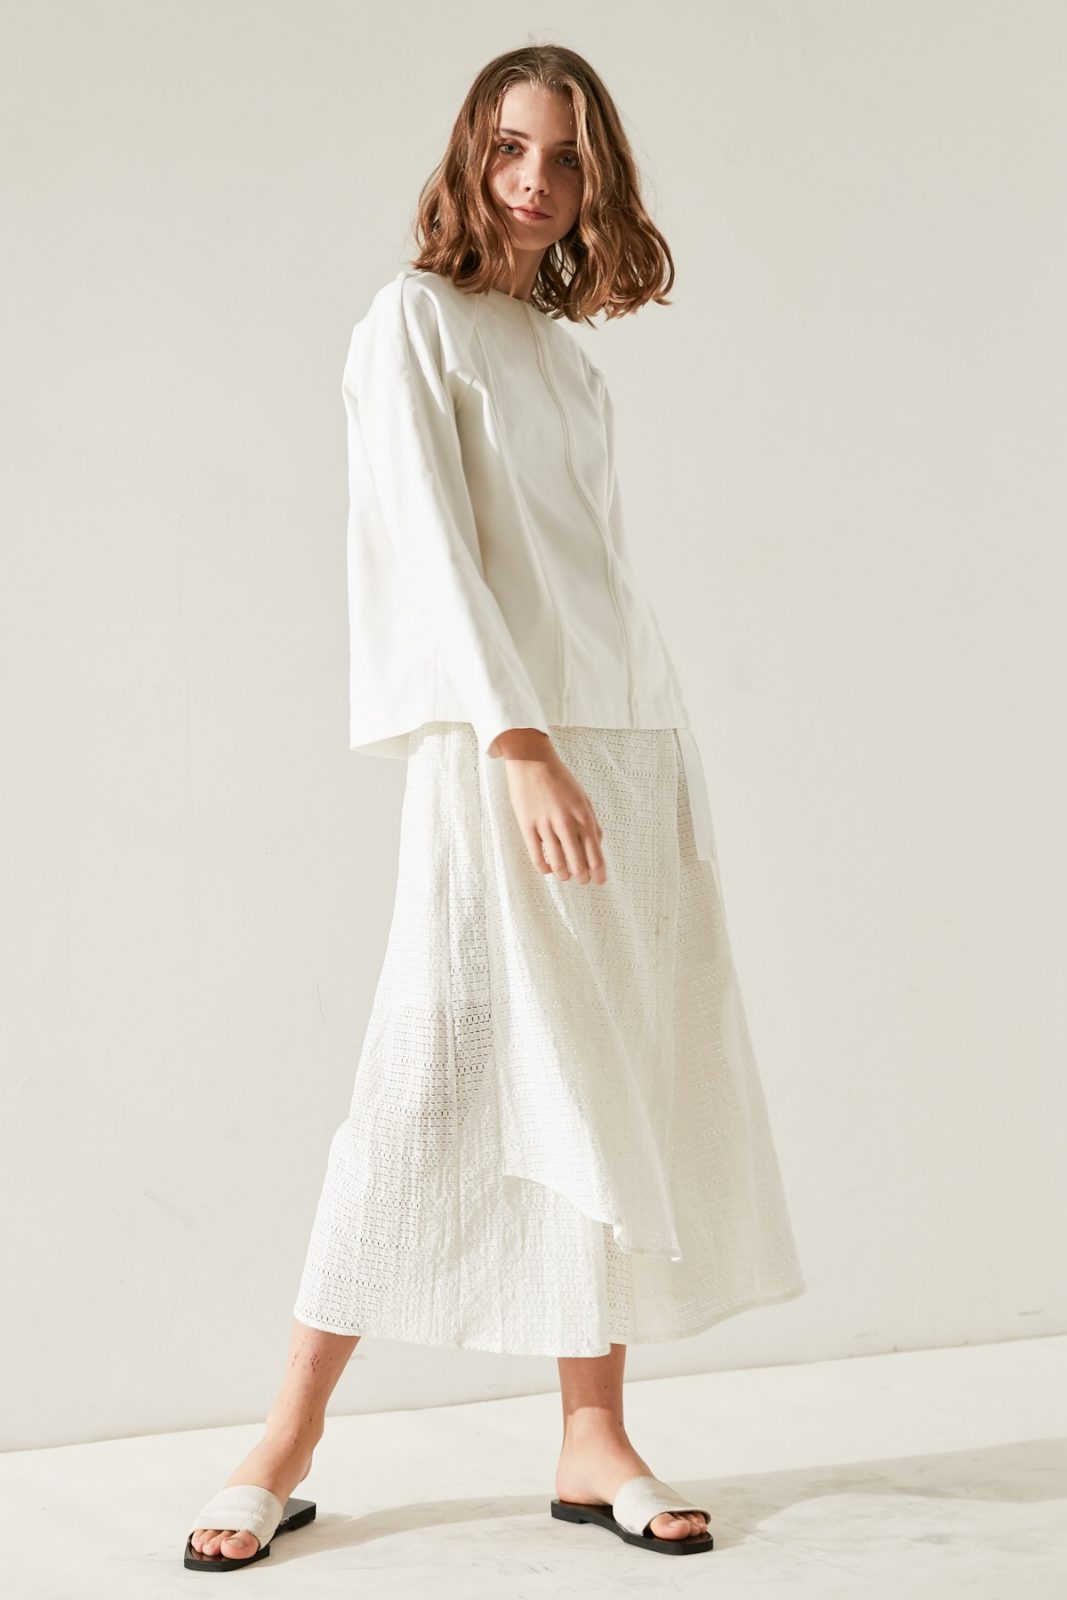 SKYE minimalist women clothing fashion Kate Chiffon Blouse Top white 5